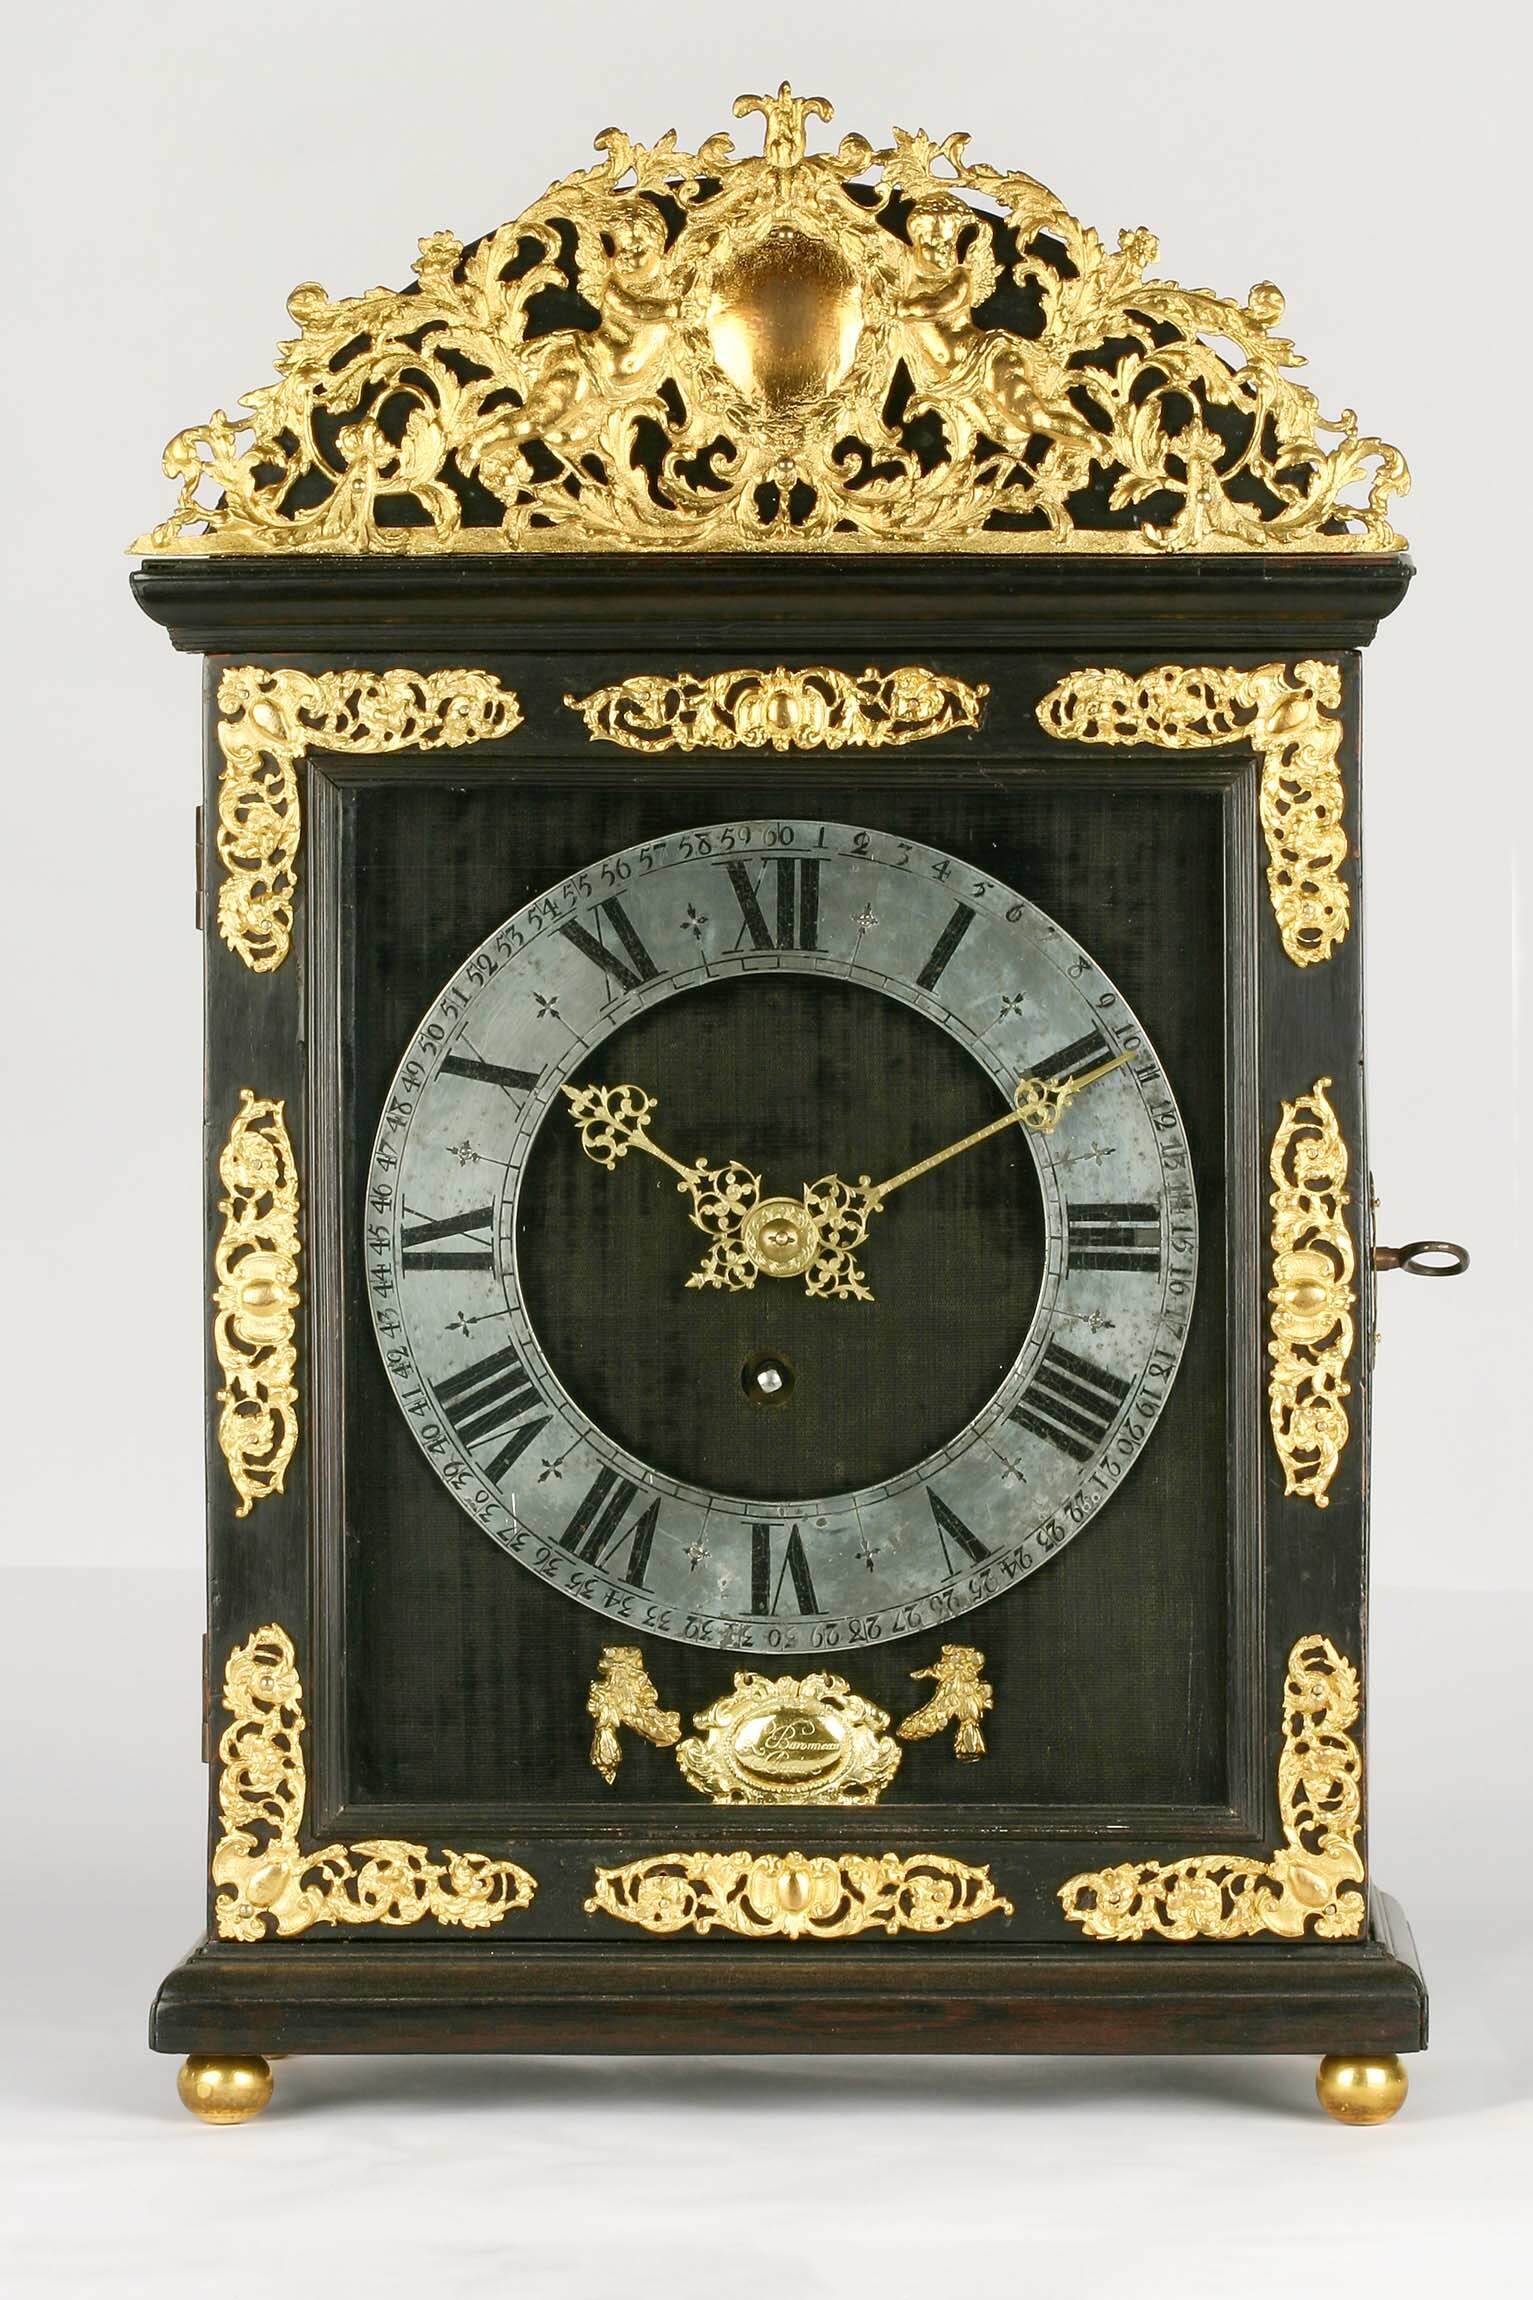 Tischuhr, L. Baronneau, Paris, um 1680 (Deutsches Uhrenmuseum CC BY-SA)